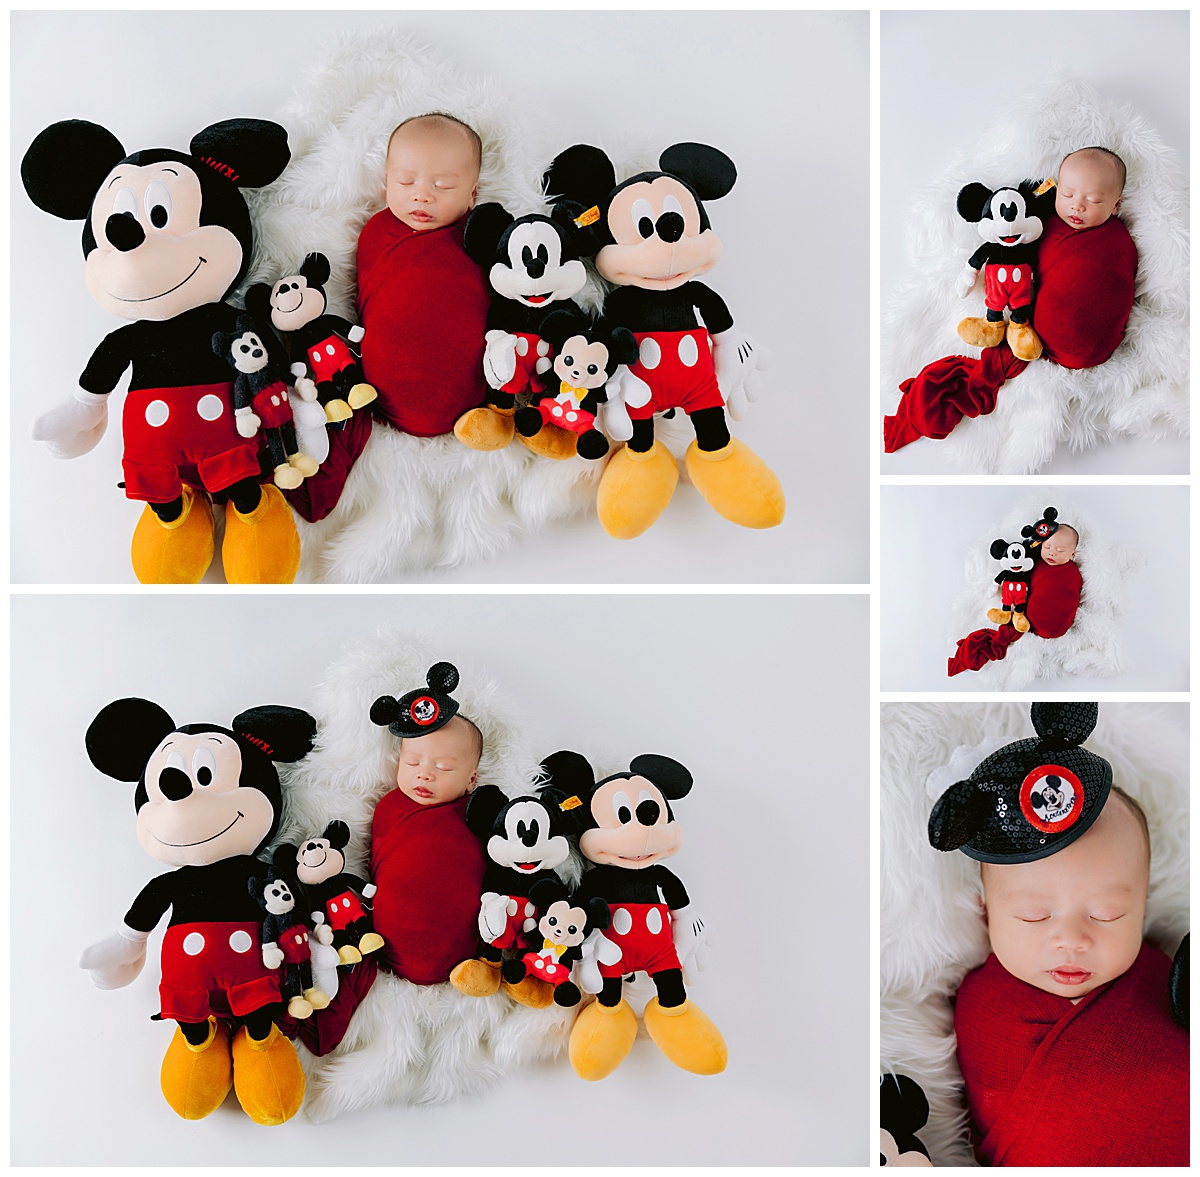 Disney Newborn Photos for Baby Boy mickey mouse themed photos 